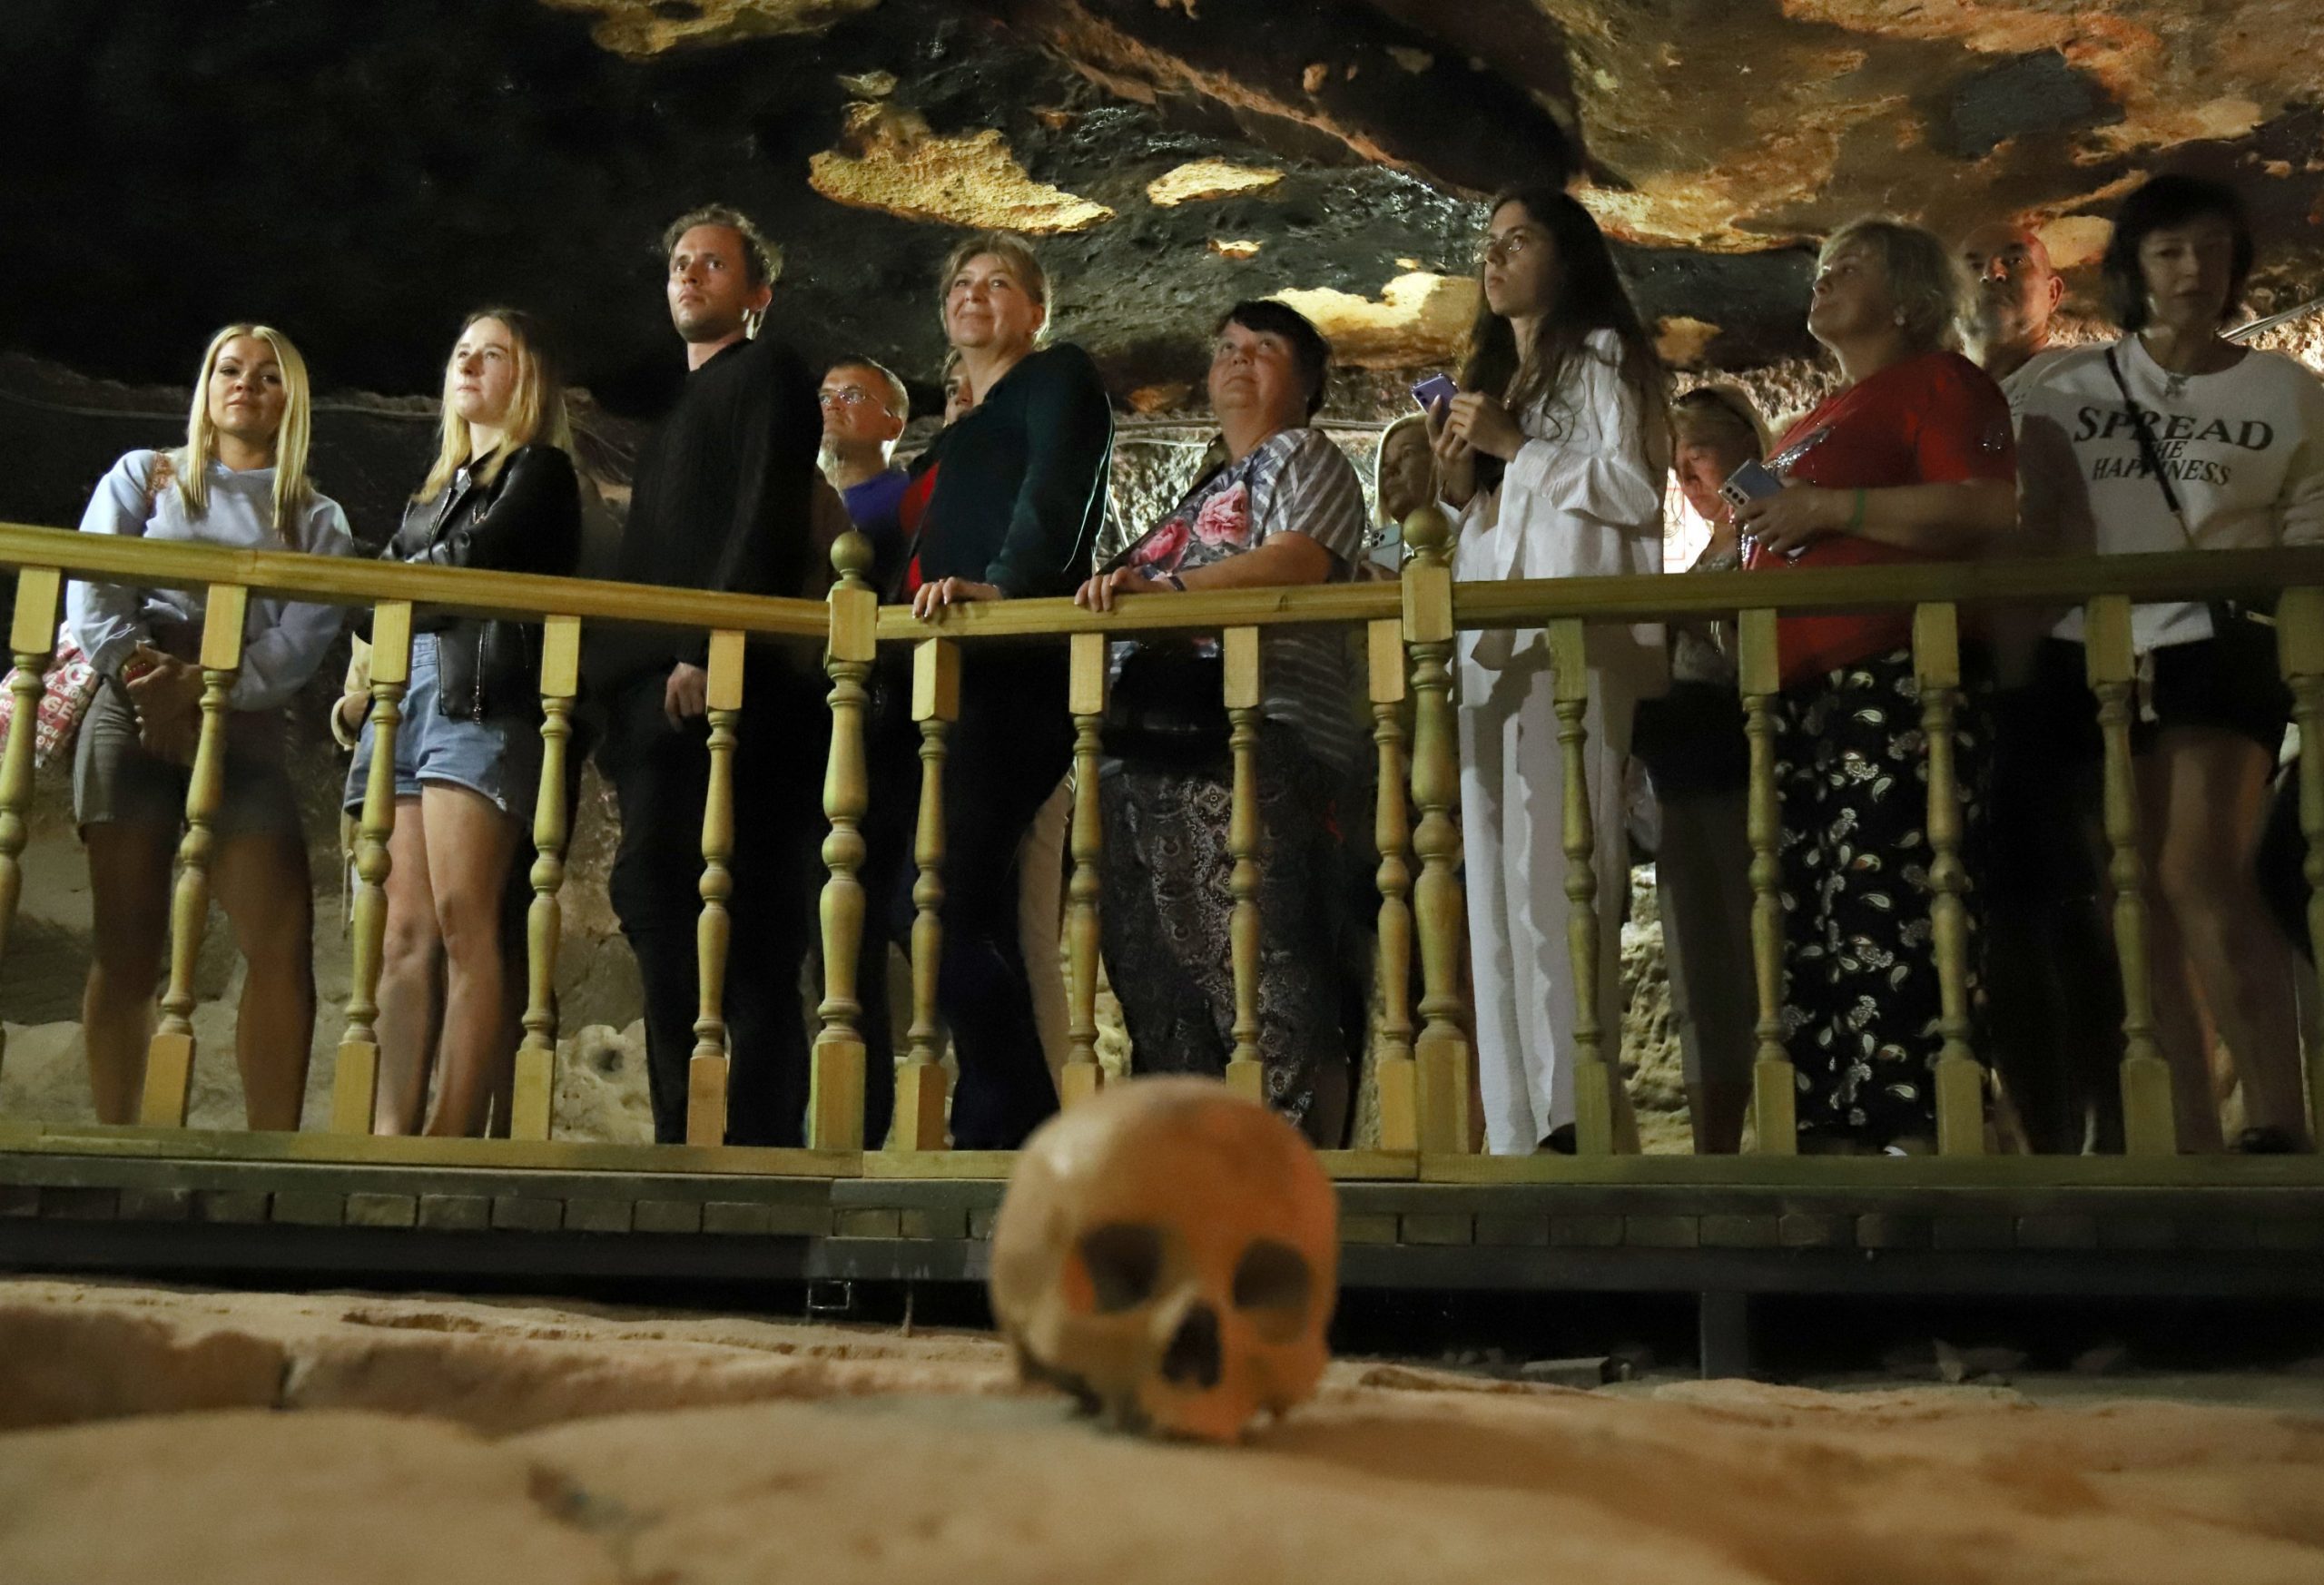 Ancient underground city in central Turkey dazzles visitors